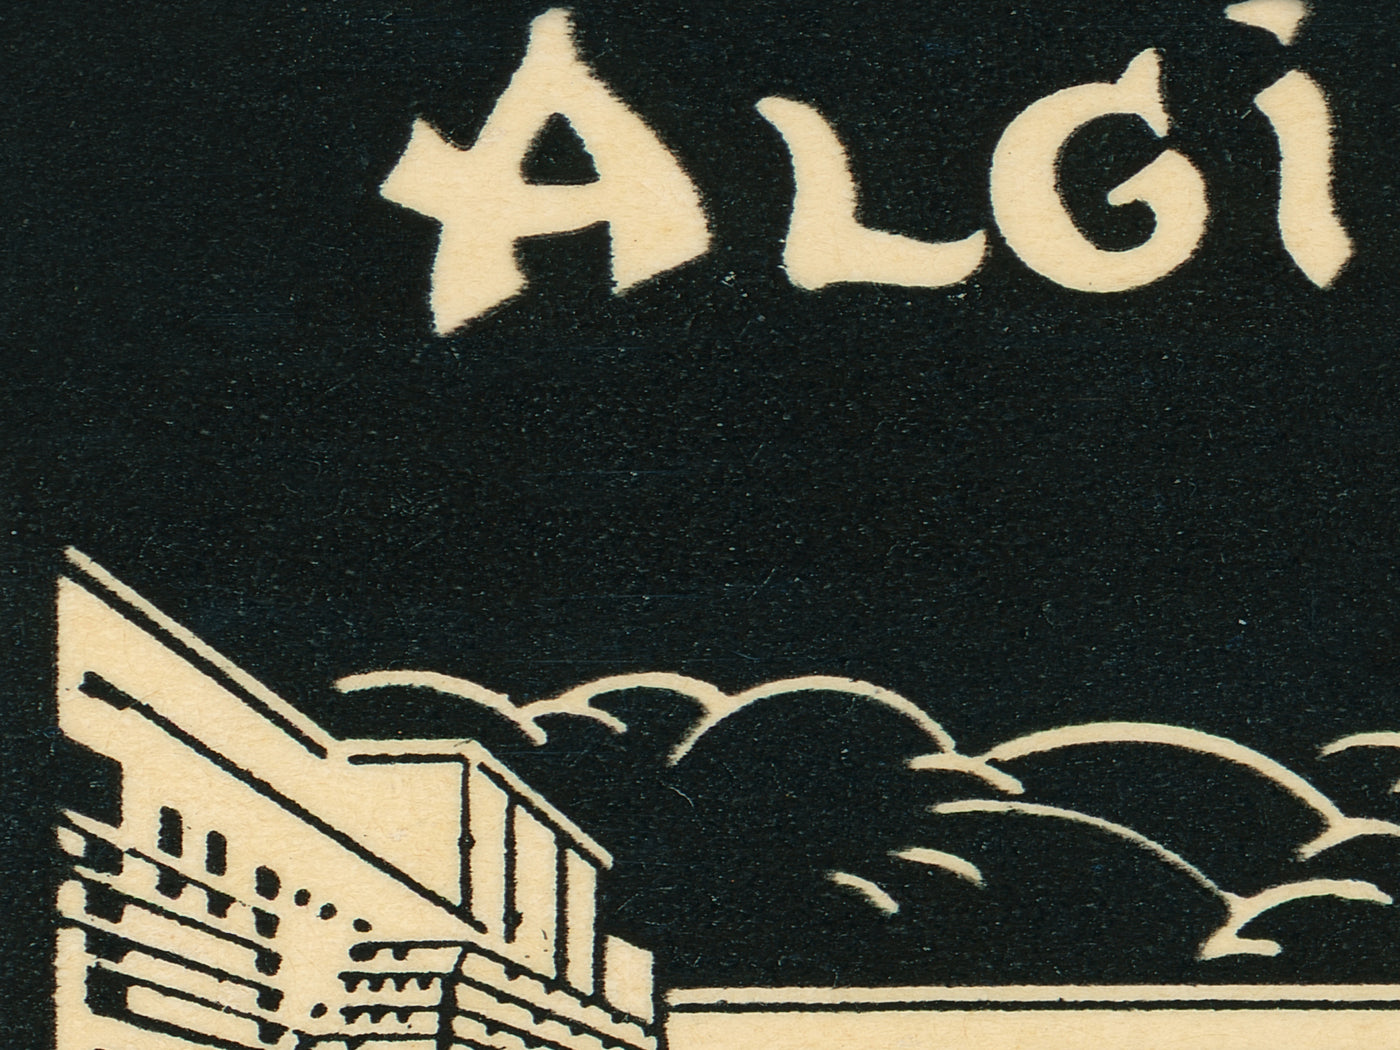 Algiers Motor Hotel Matchbook Print